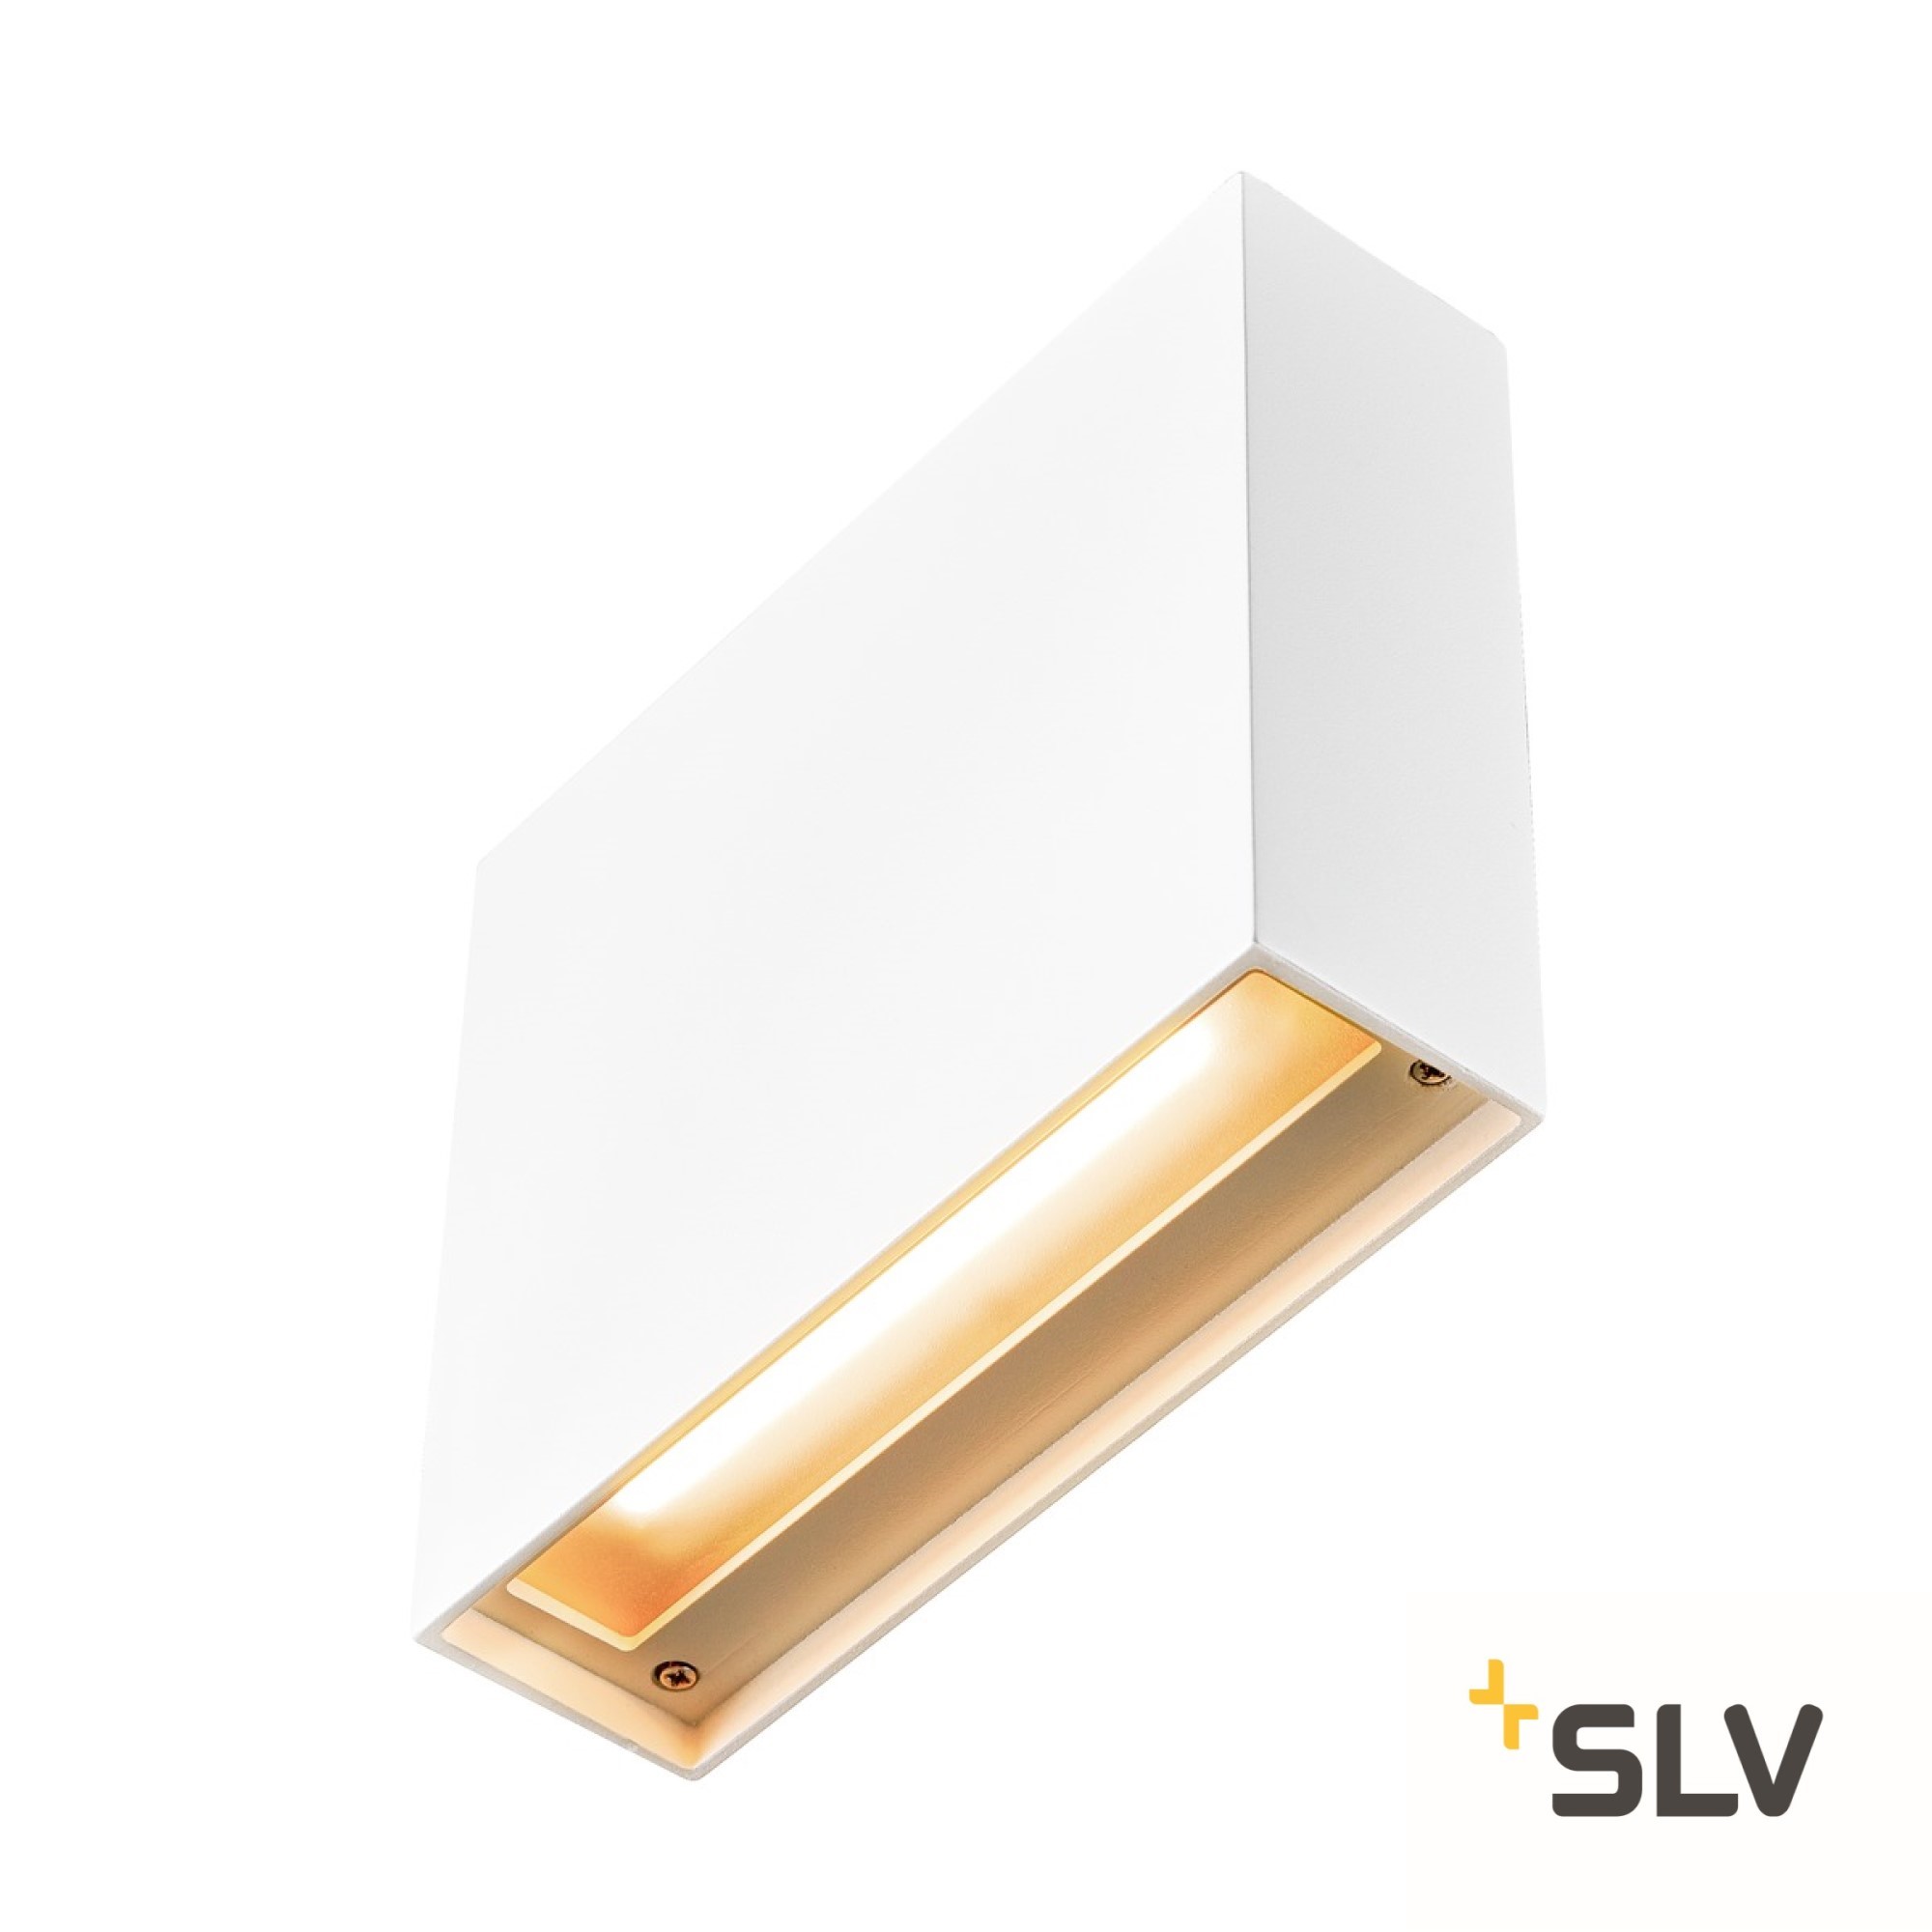 SLV QUAD FRAME 19 LED Wall Light 2700/3000K white TRIAC-dimmable 640lm